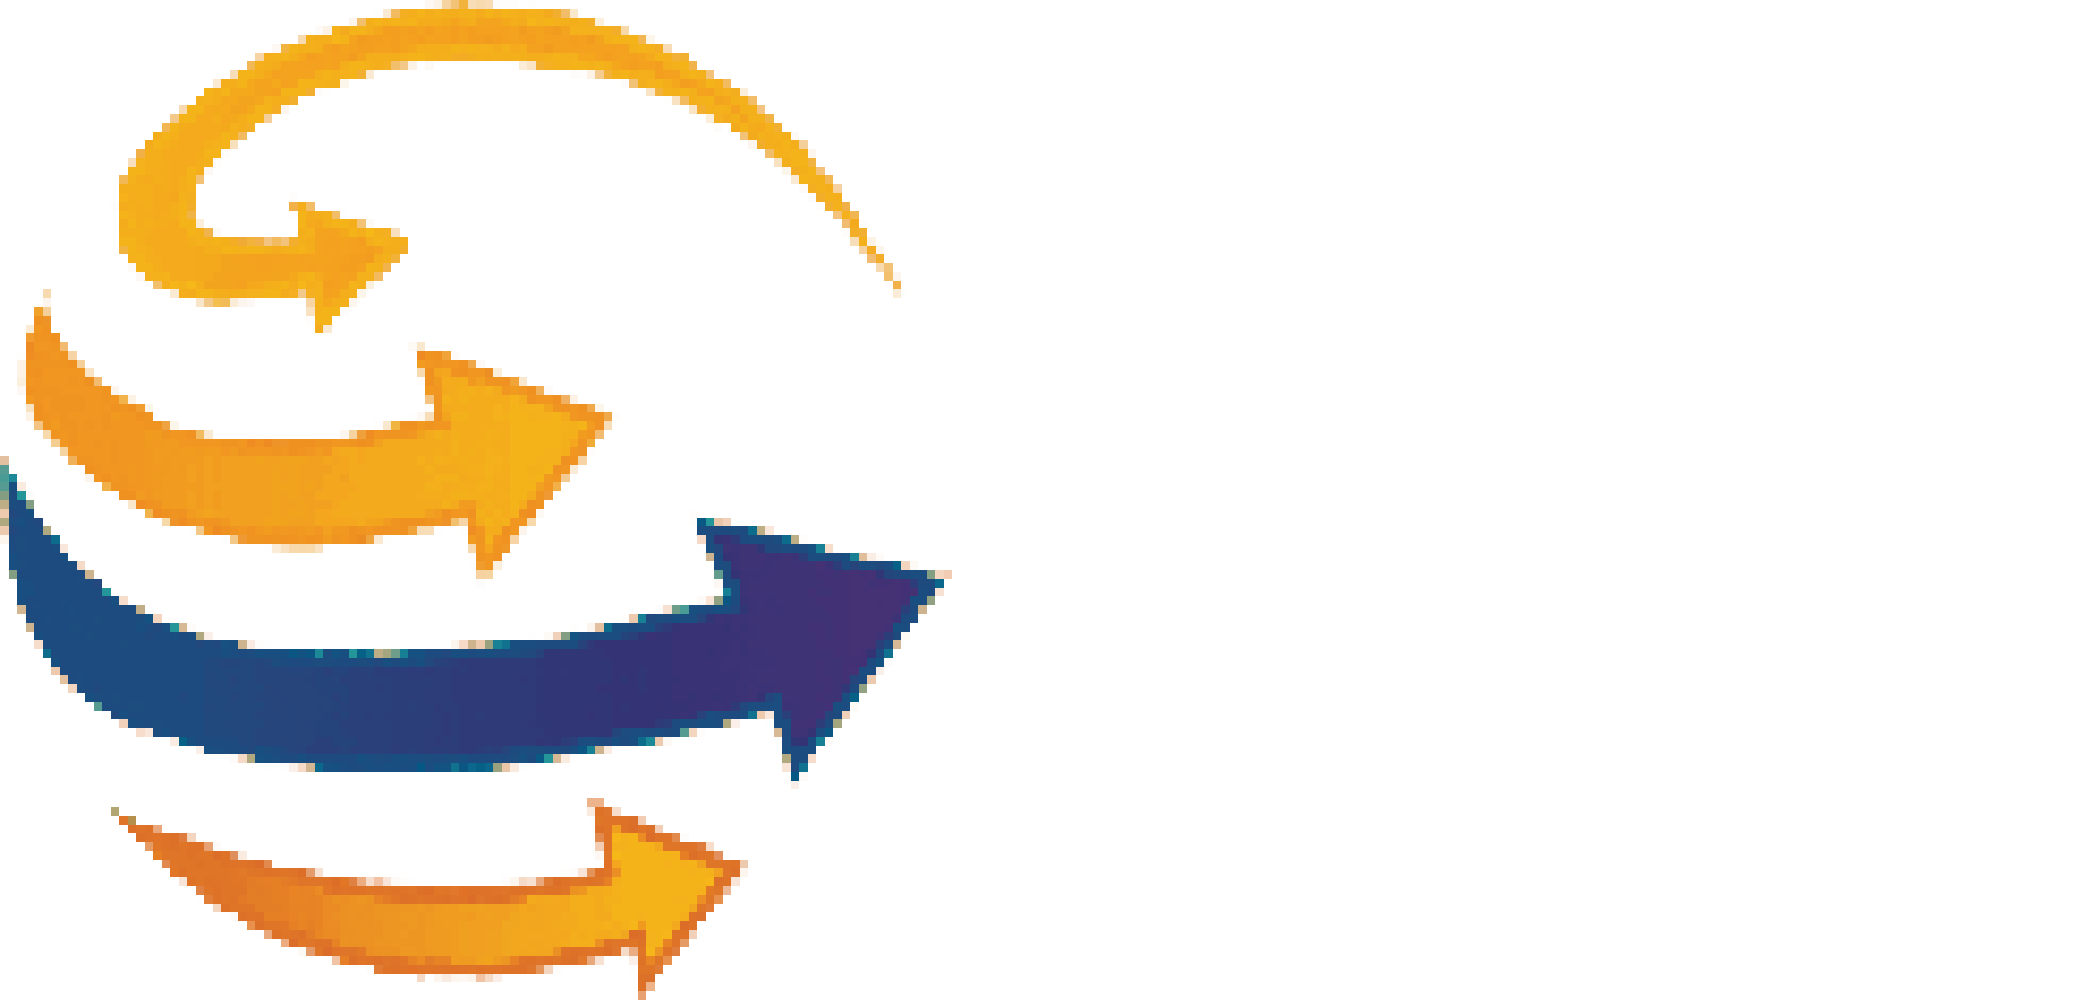 Source 2 Supply